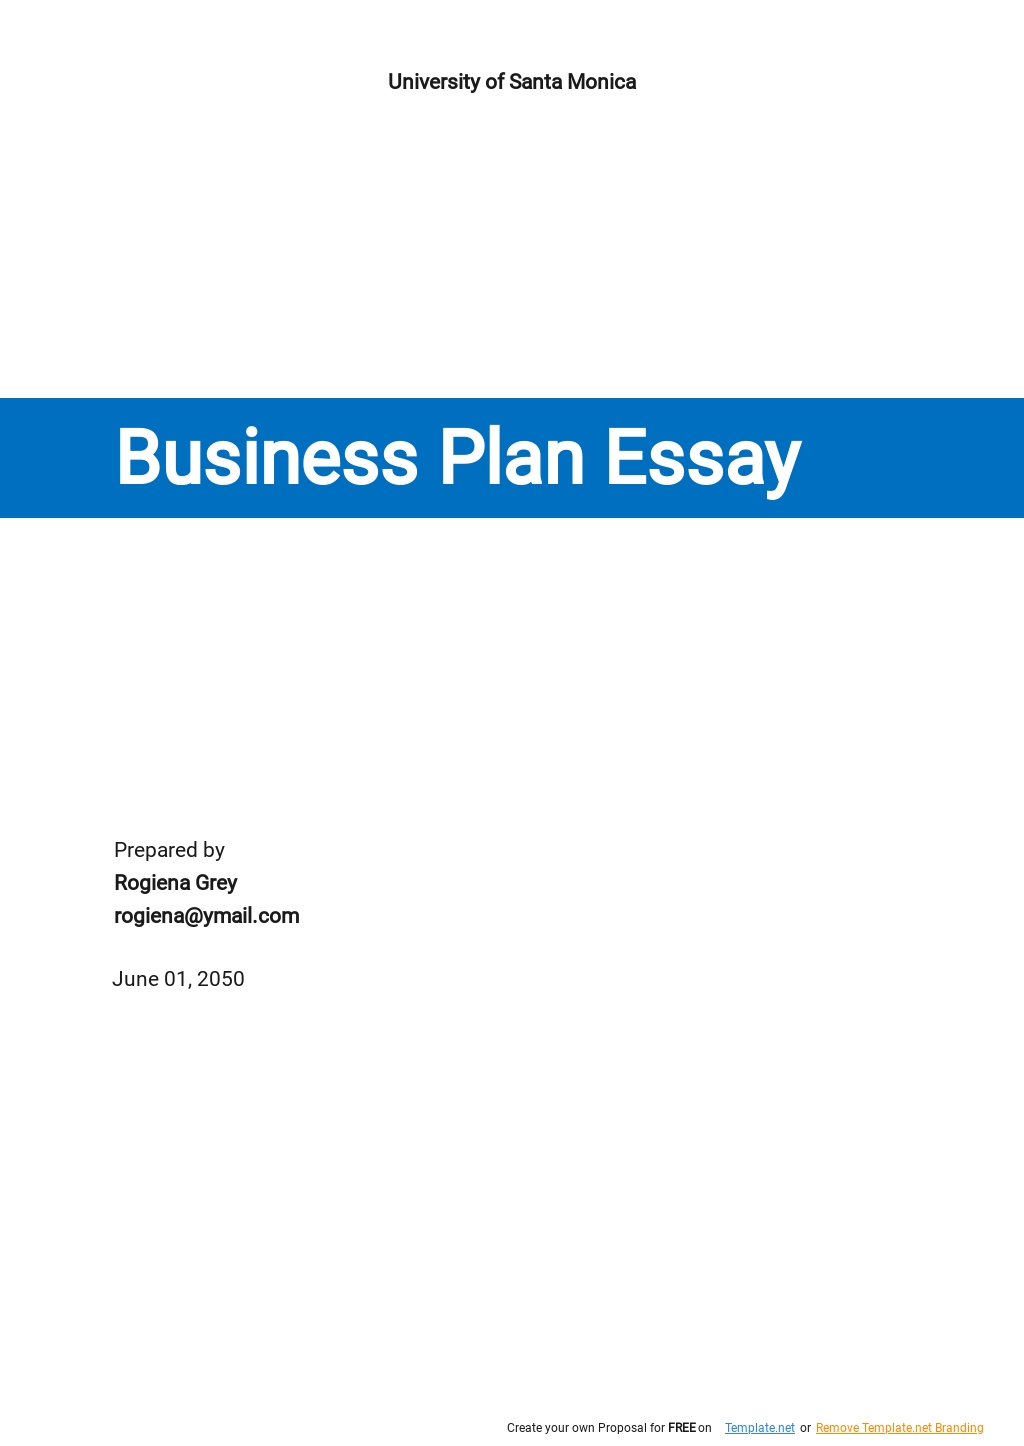 writing a business plan essay